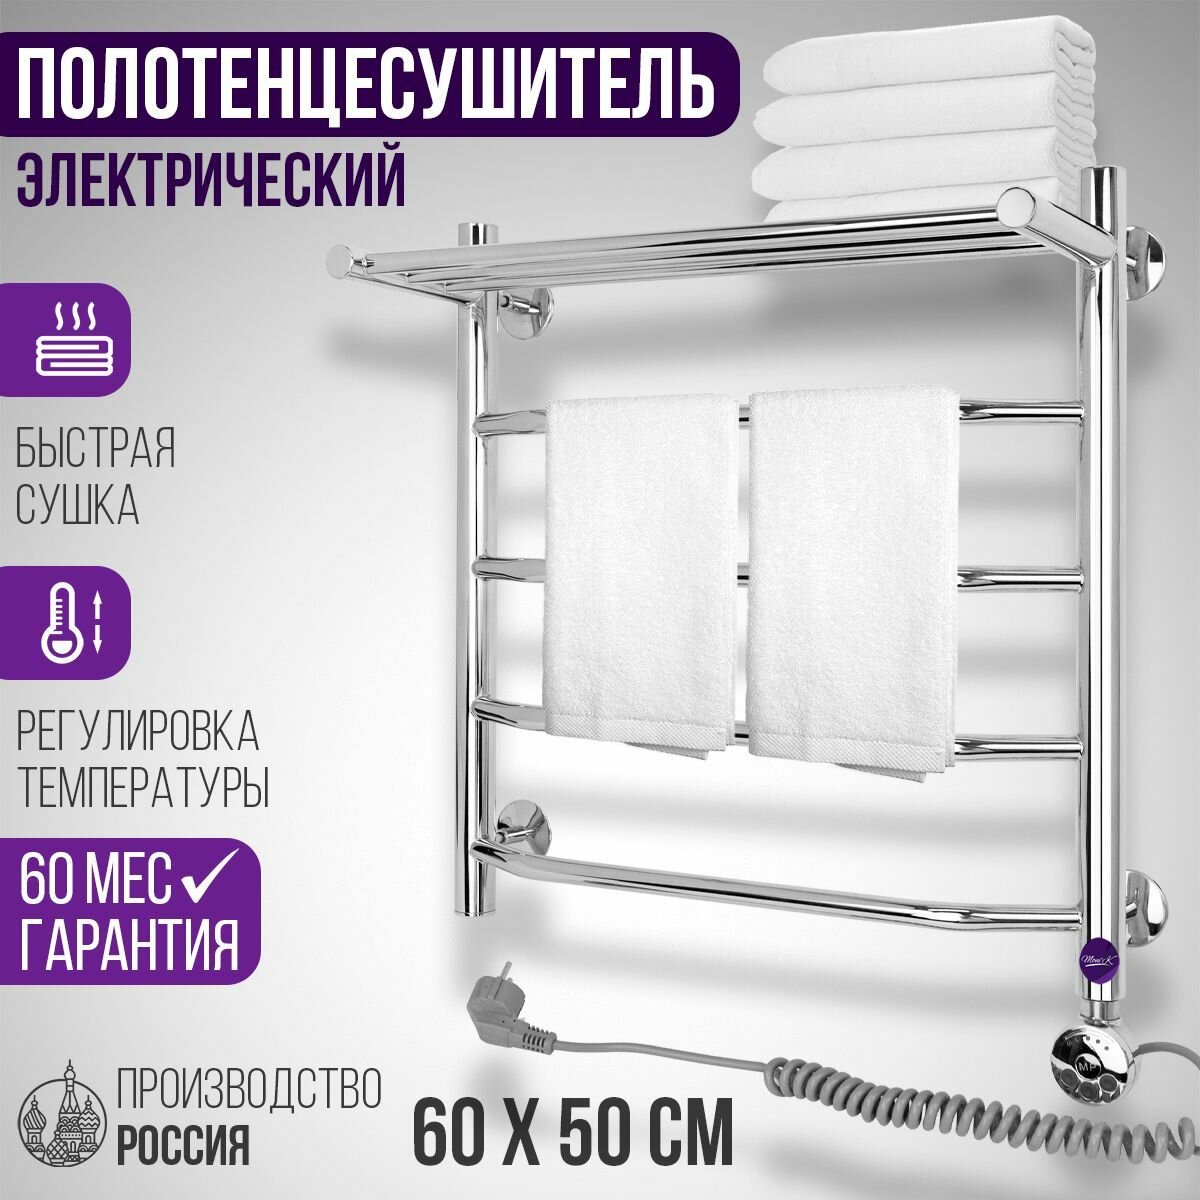 Полотенцесушитель электрический MoniK, 50х60 см, хром, с терморегулятором